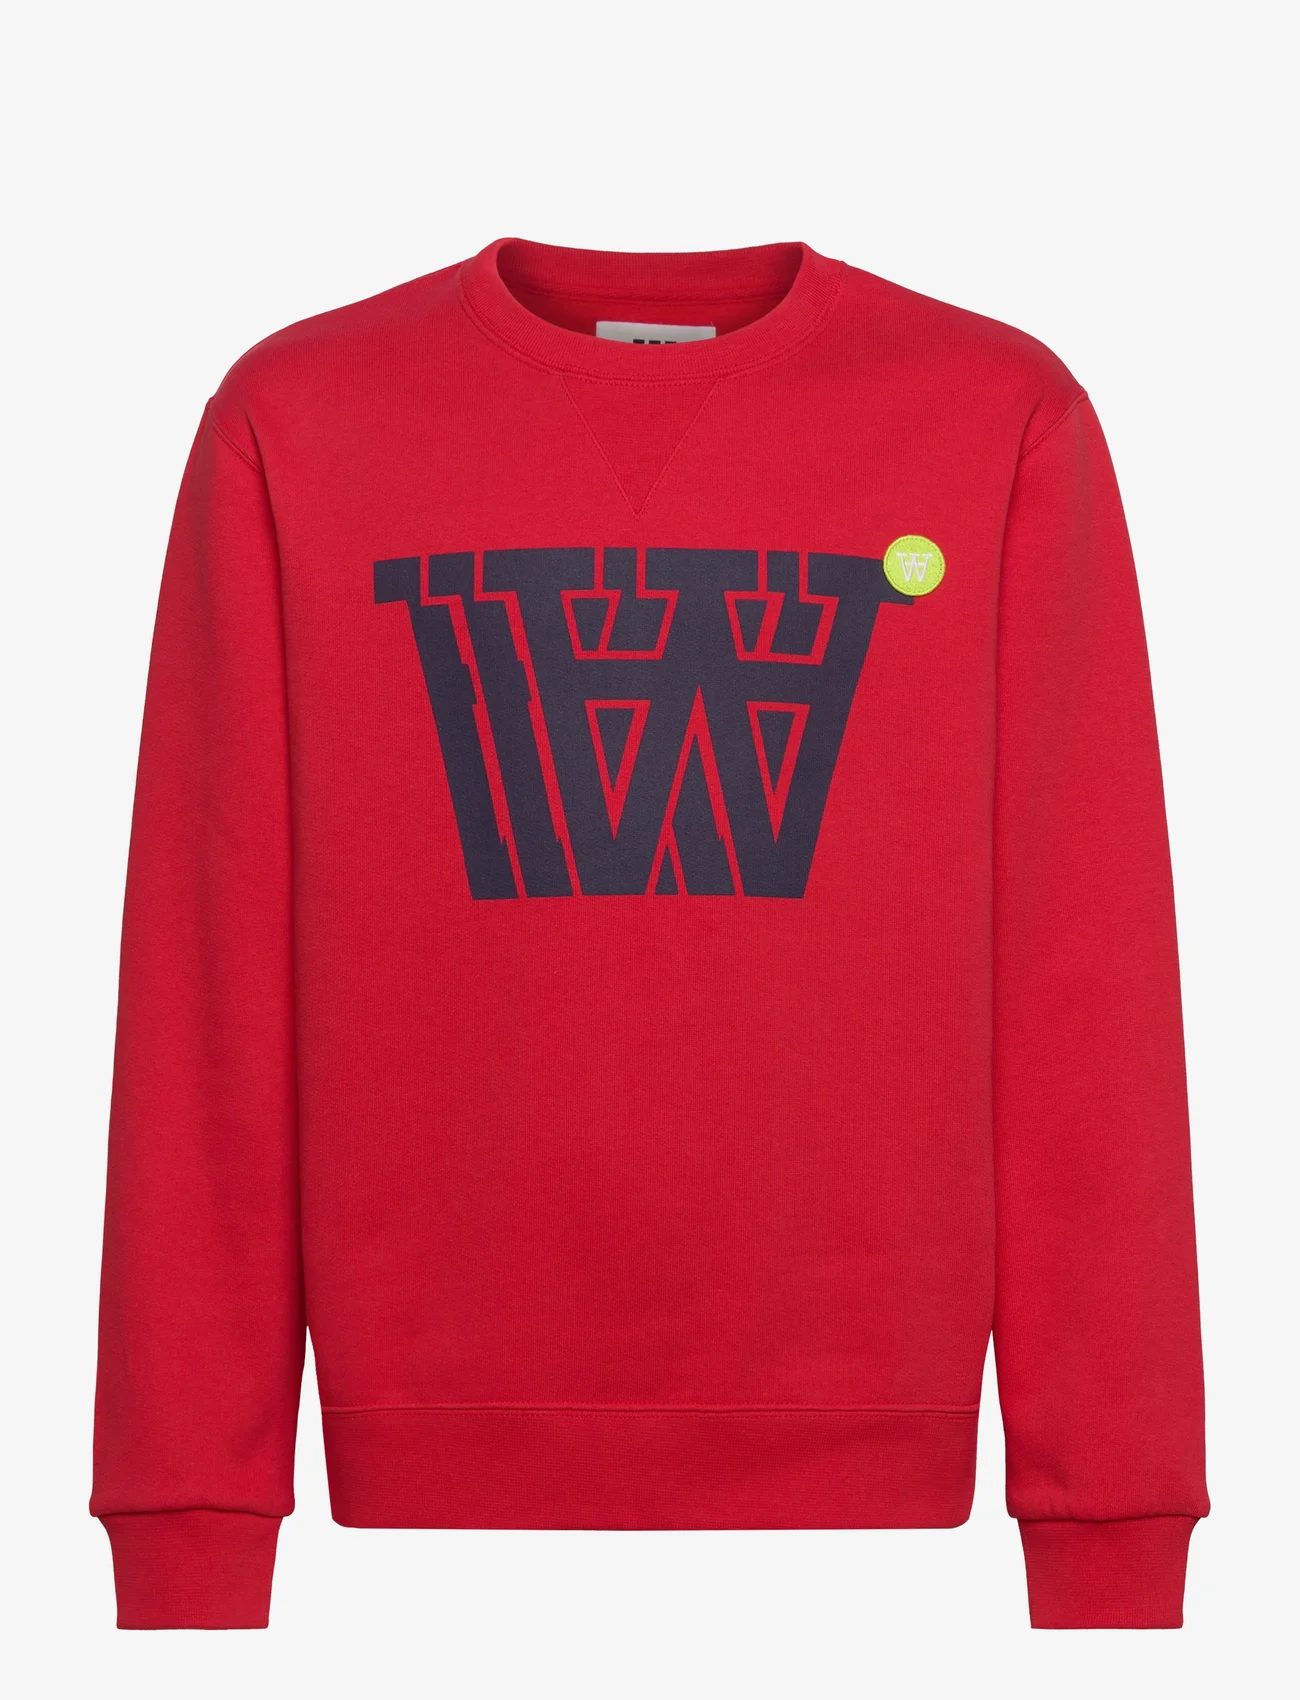 Wood Wood - Rod badge logo junior sweatshirt - apple red - 0